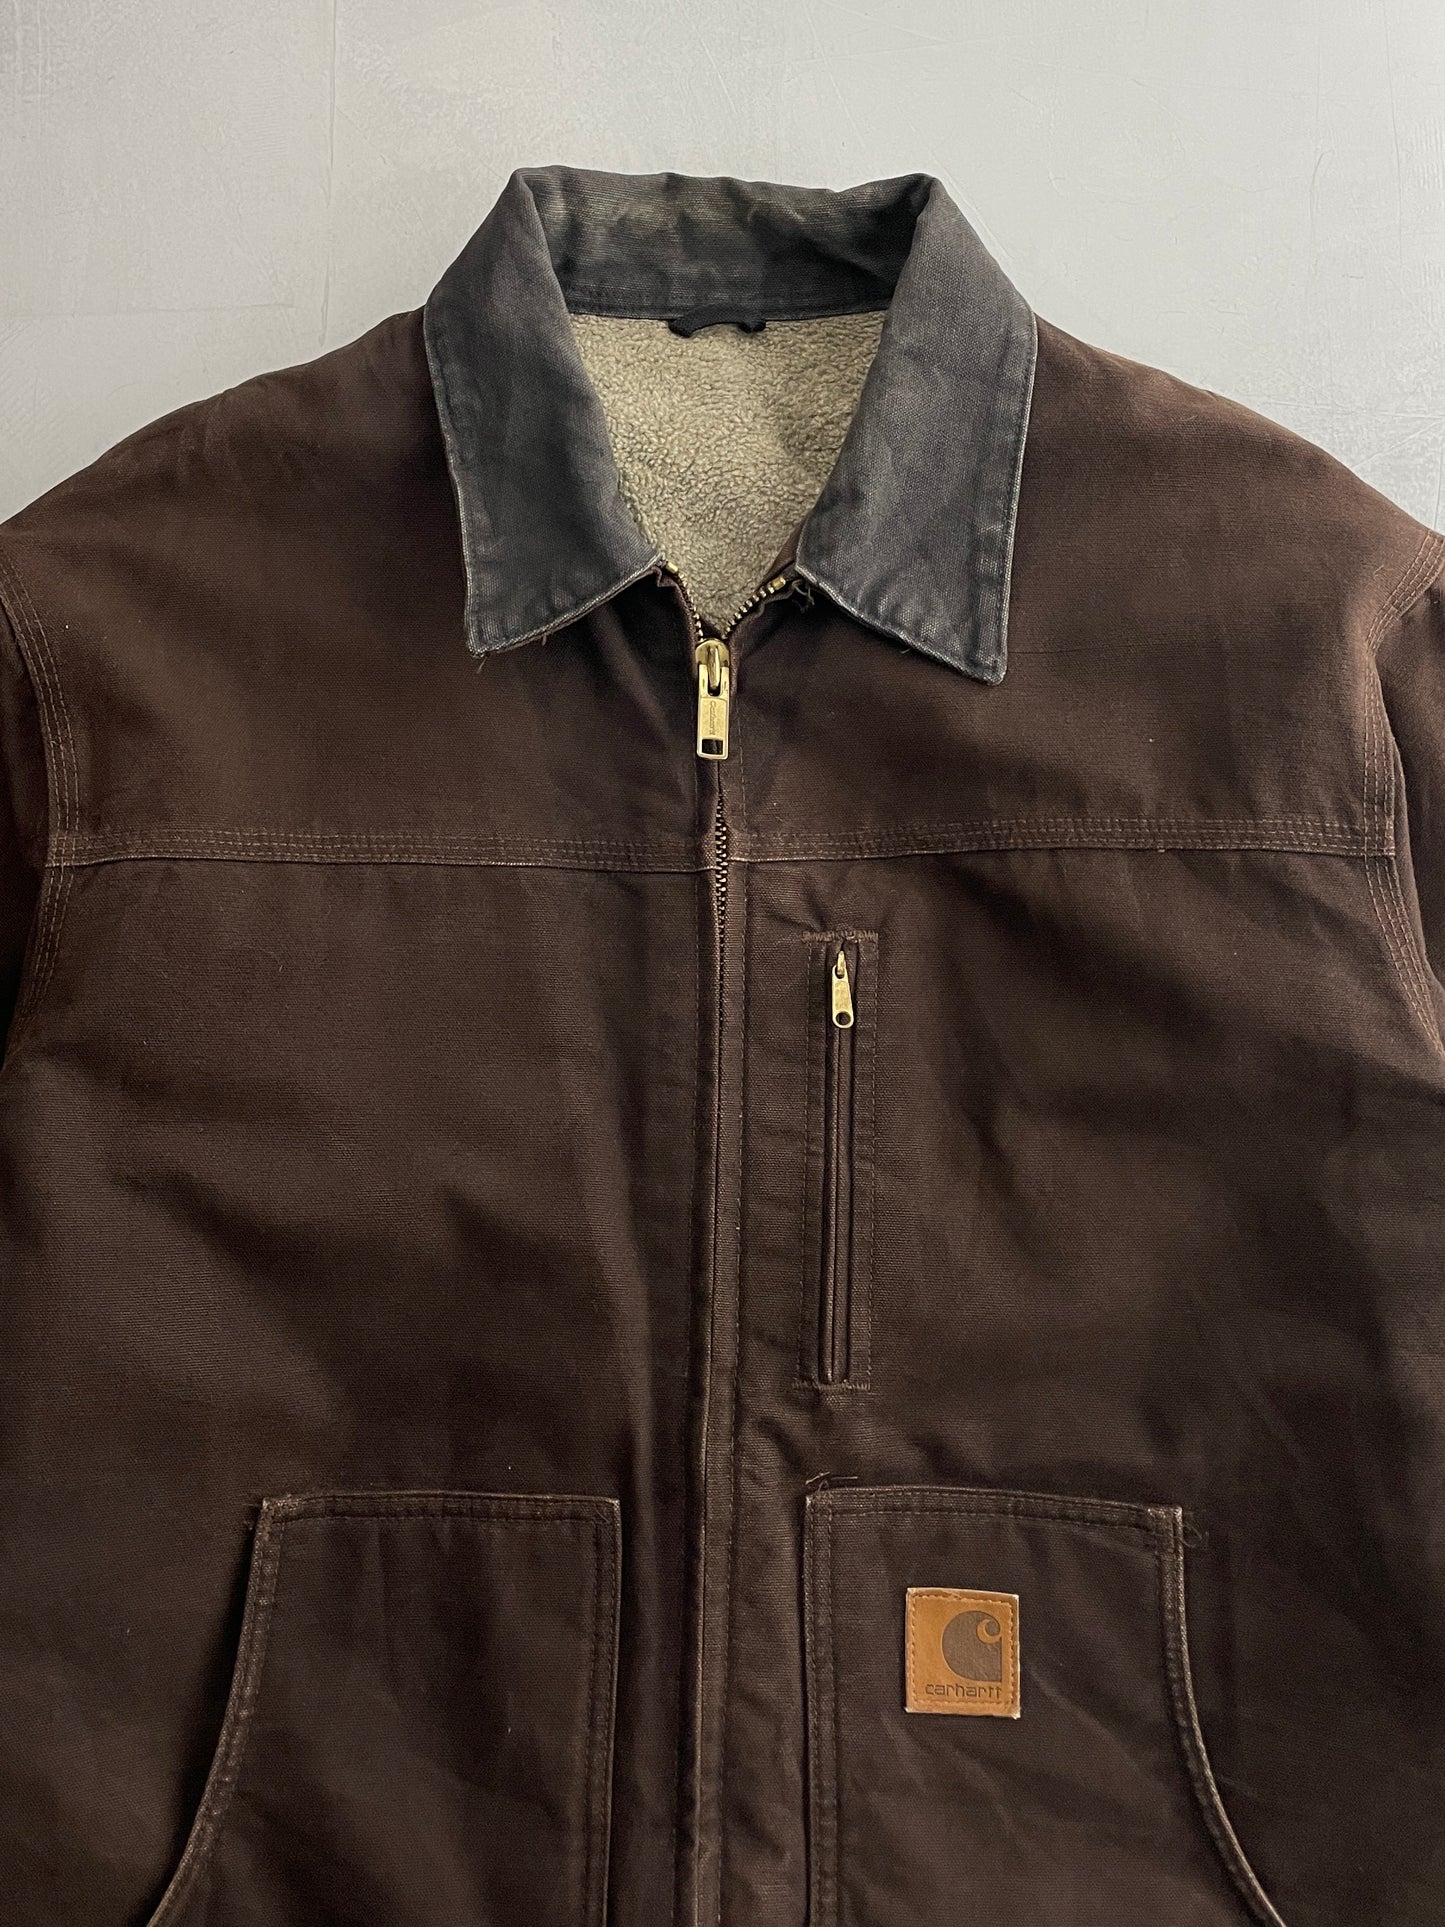 Carhartt Traditional Jacket [XL]